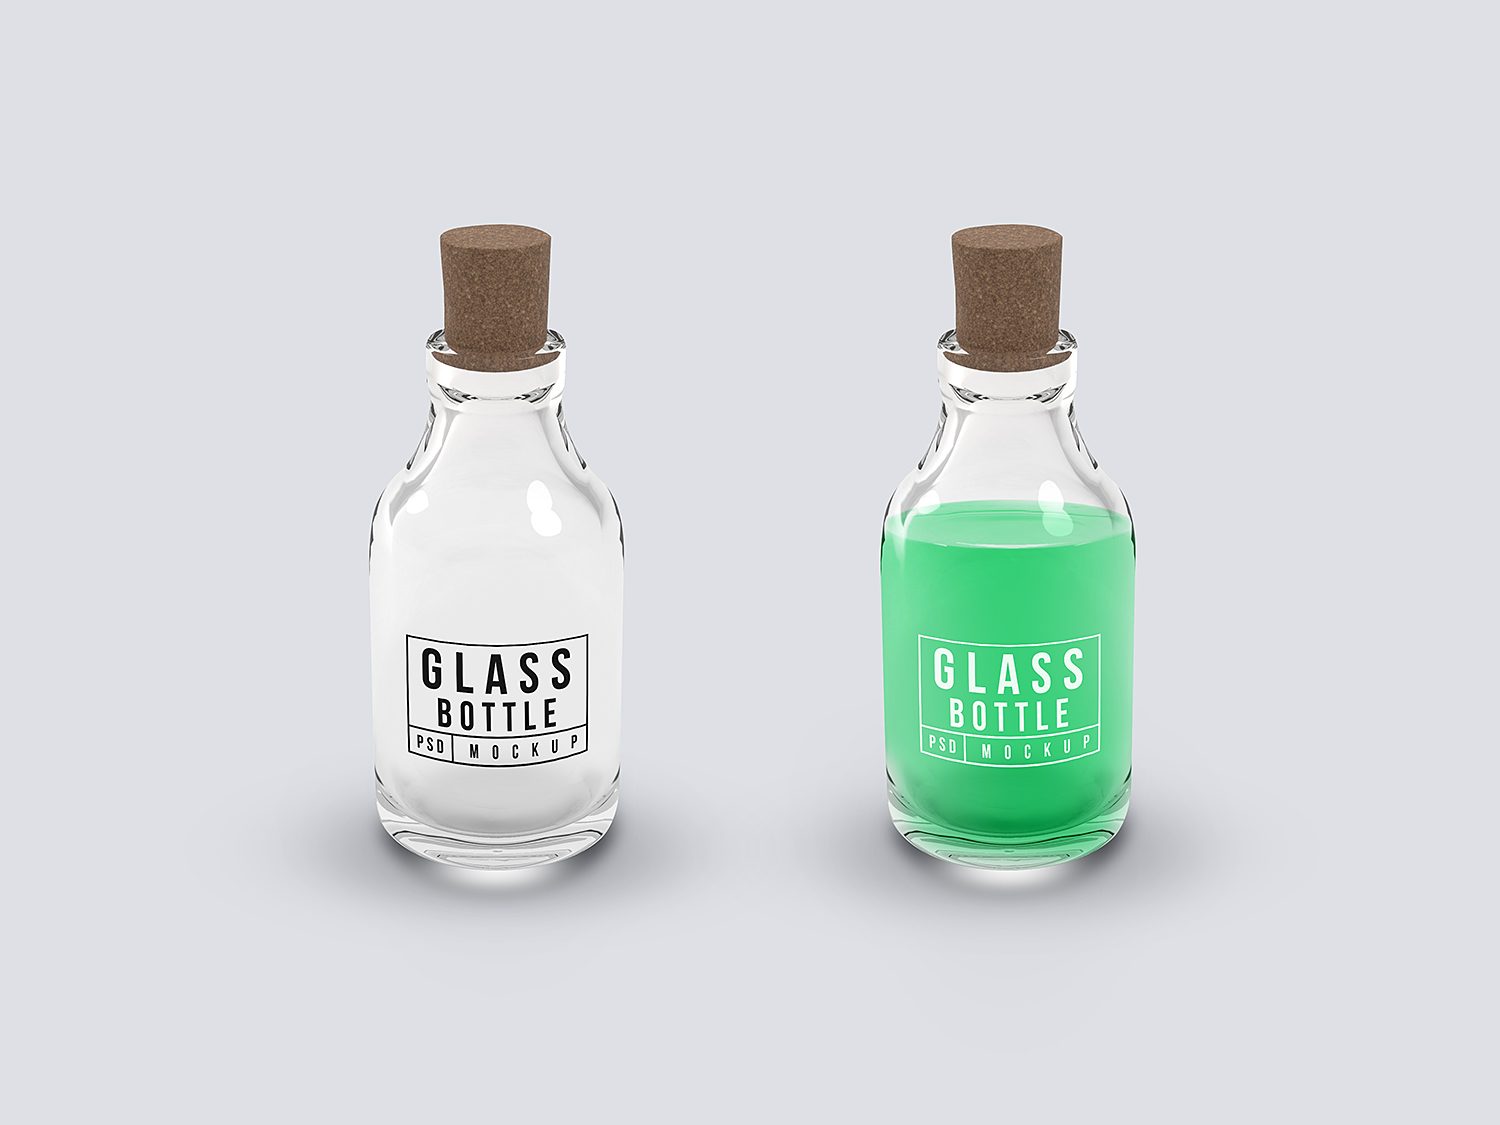 Free Glass Bottle PSD Mockup